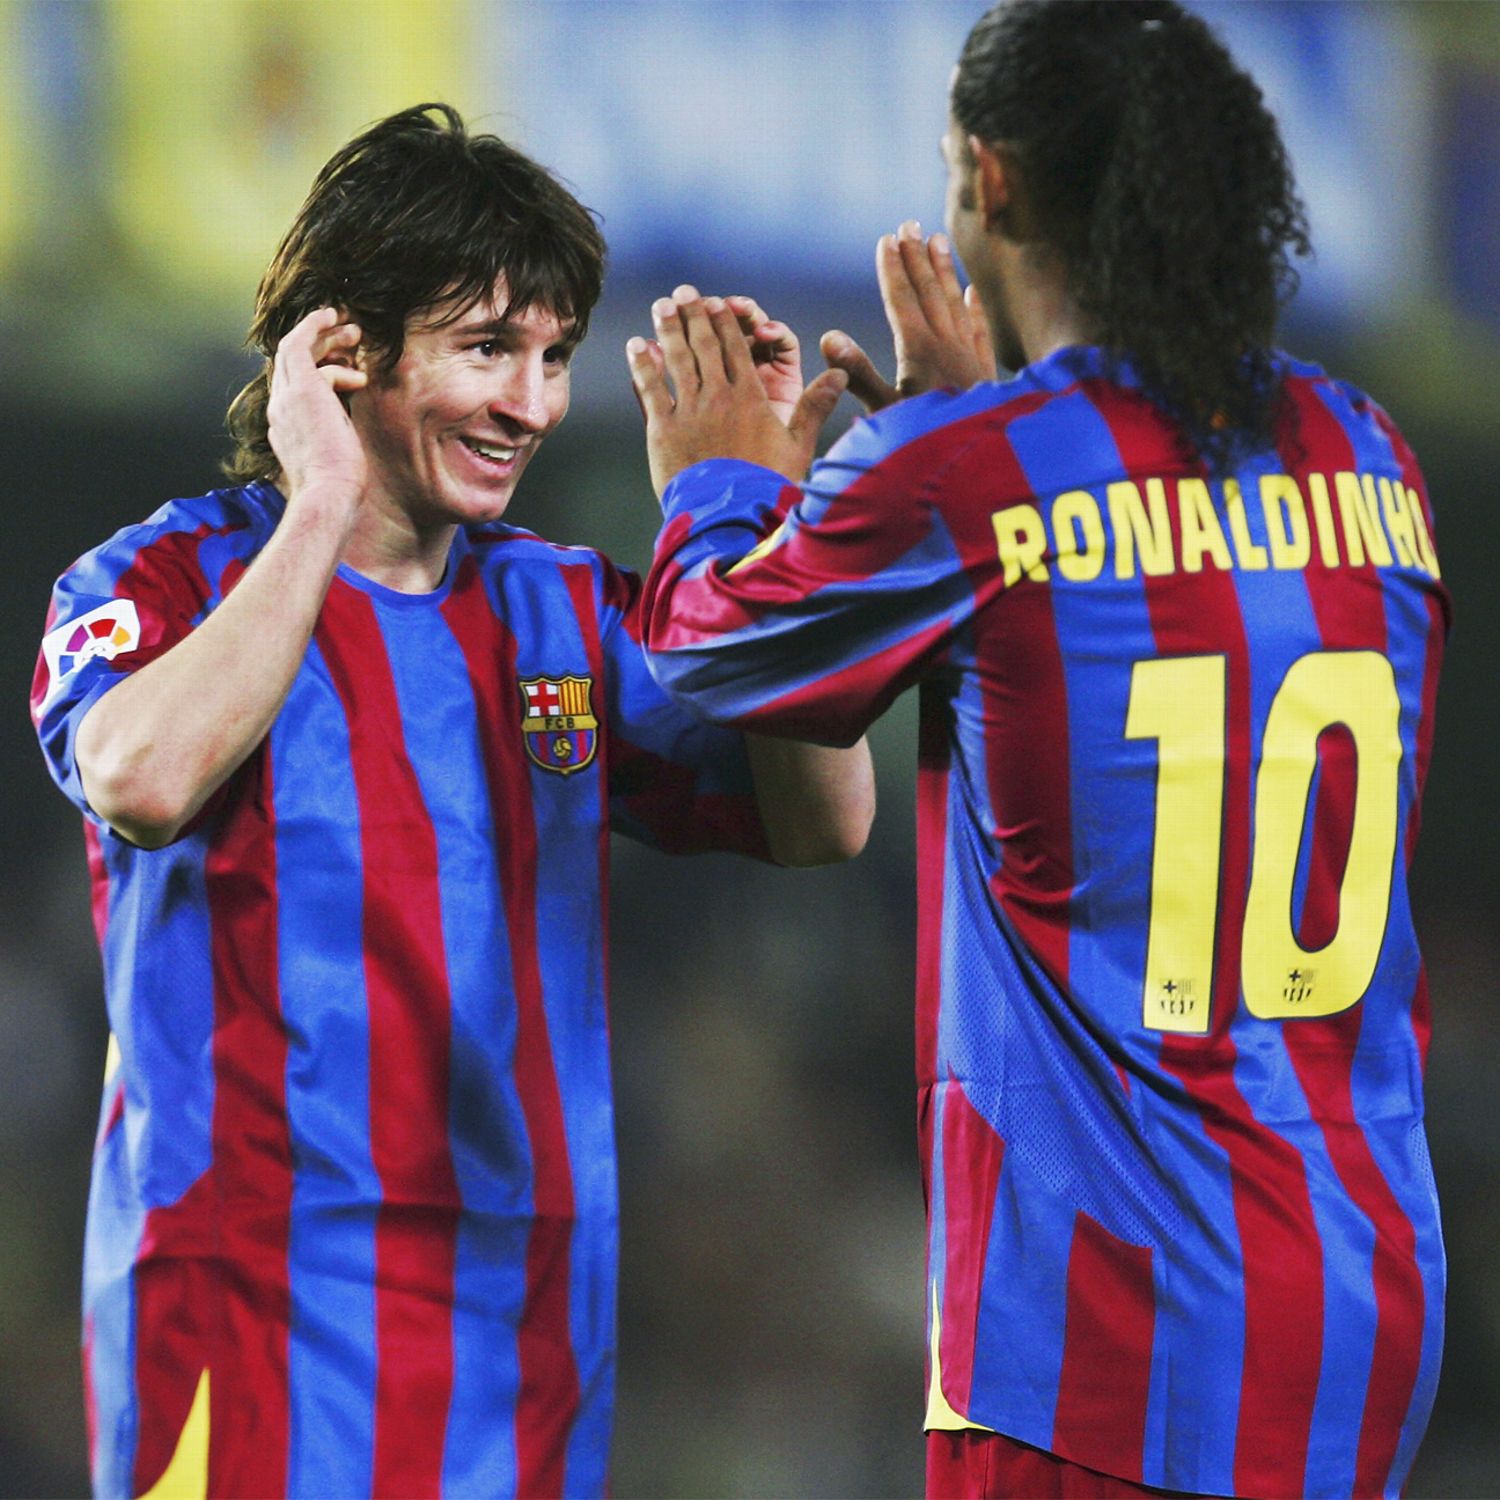 Ronaldinho rues not playing alongside Barcelona's Lionel Messi more - ESPN FC